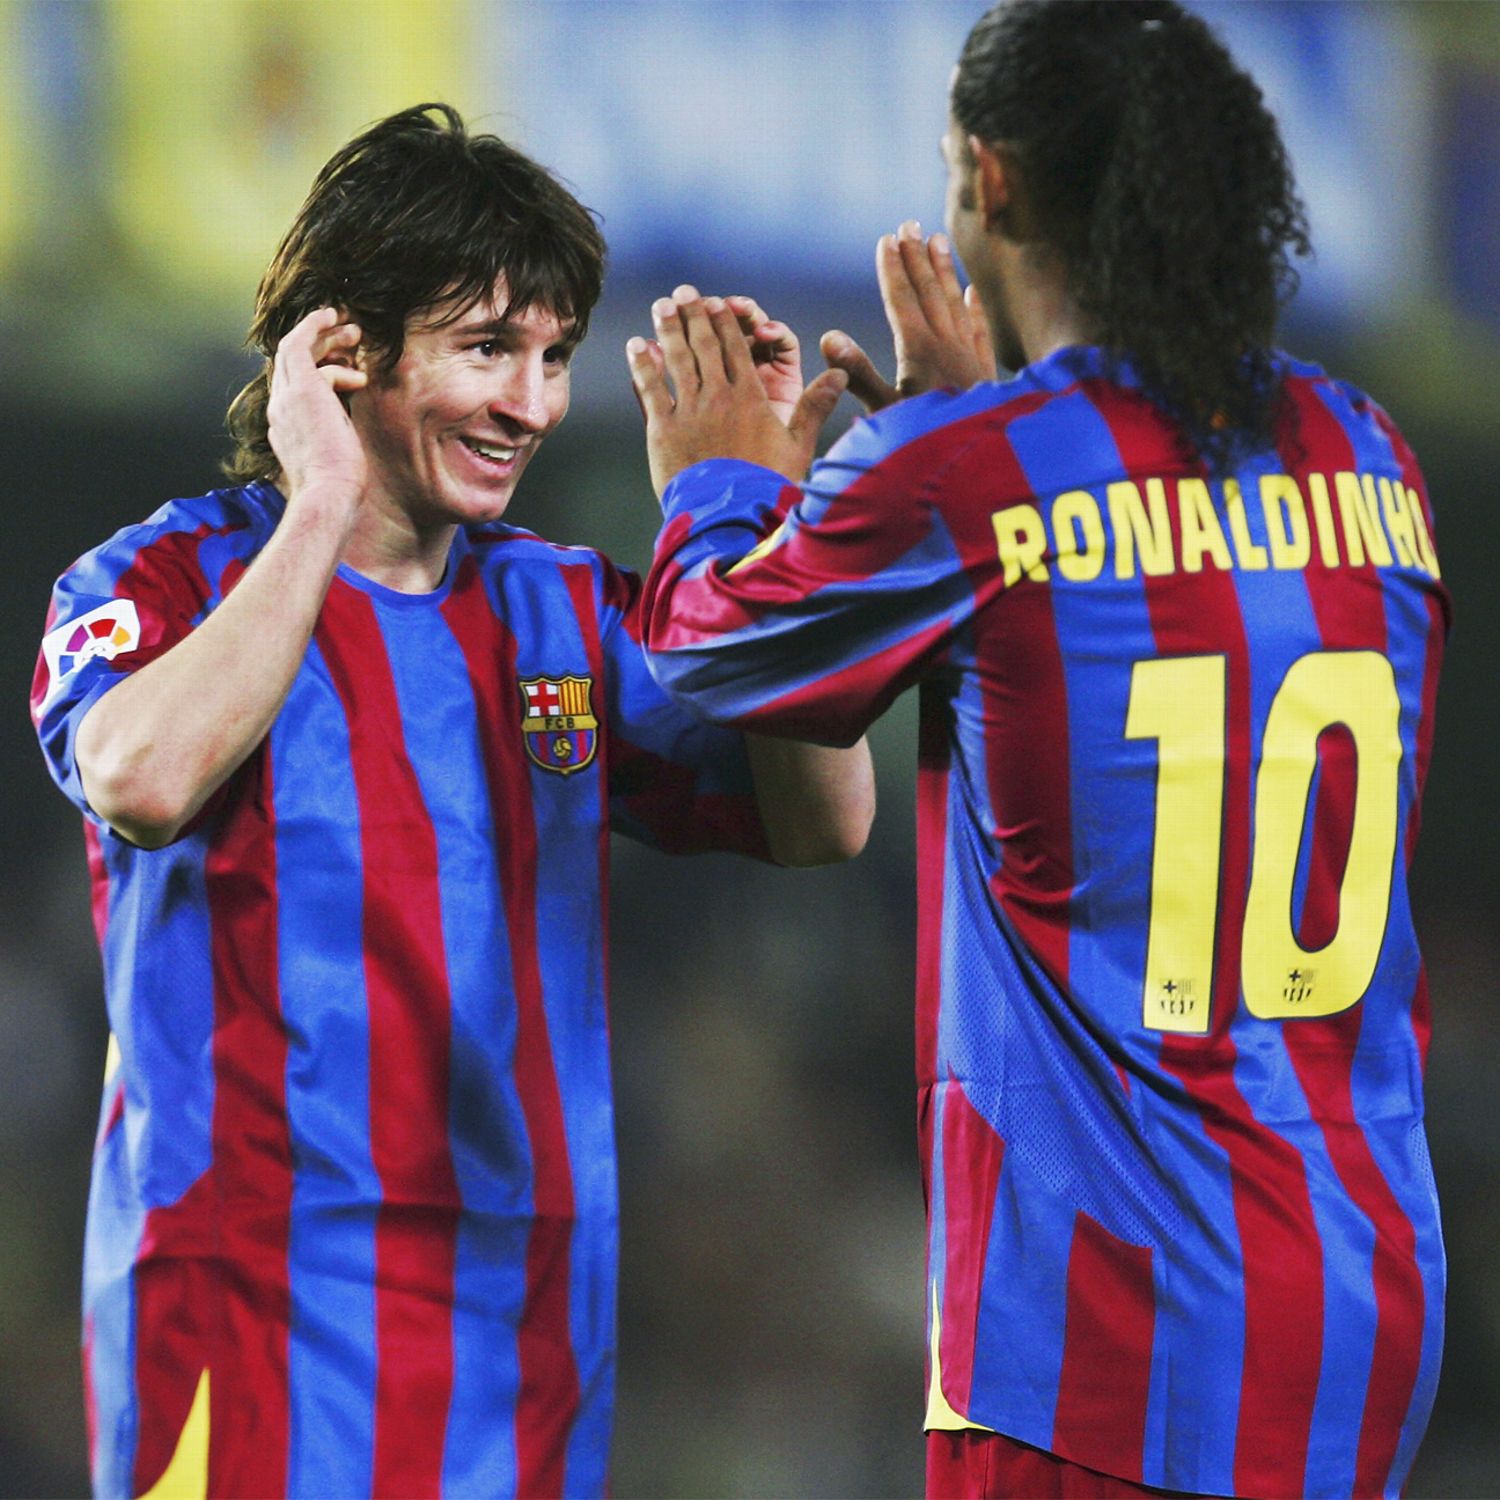 Ronaldinho rues not playing alongside Barcelona's Lionel Messi more - ESPN FC